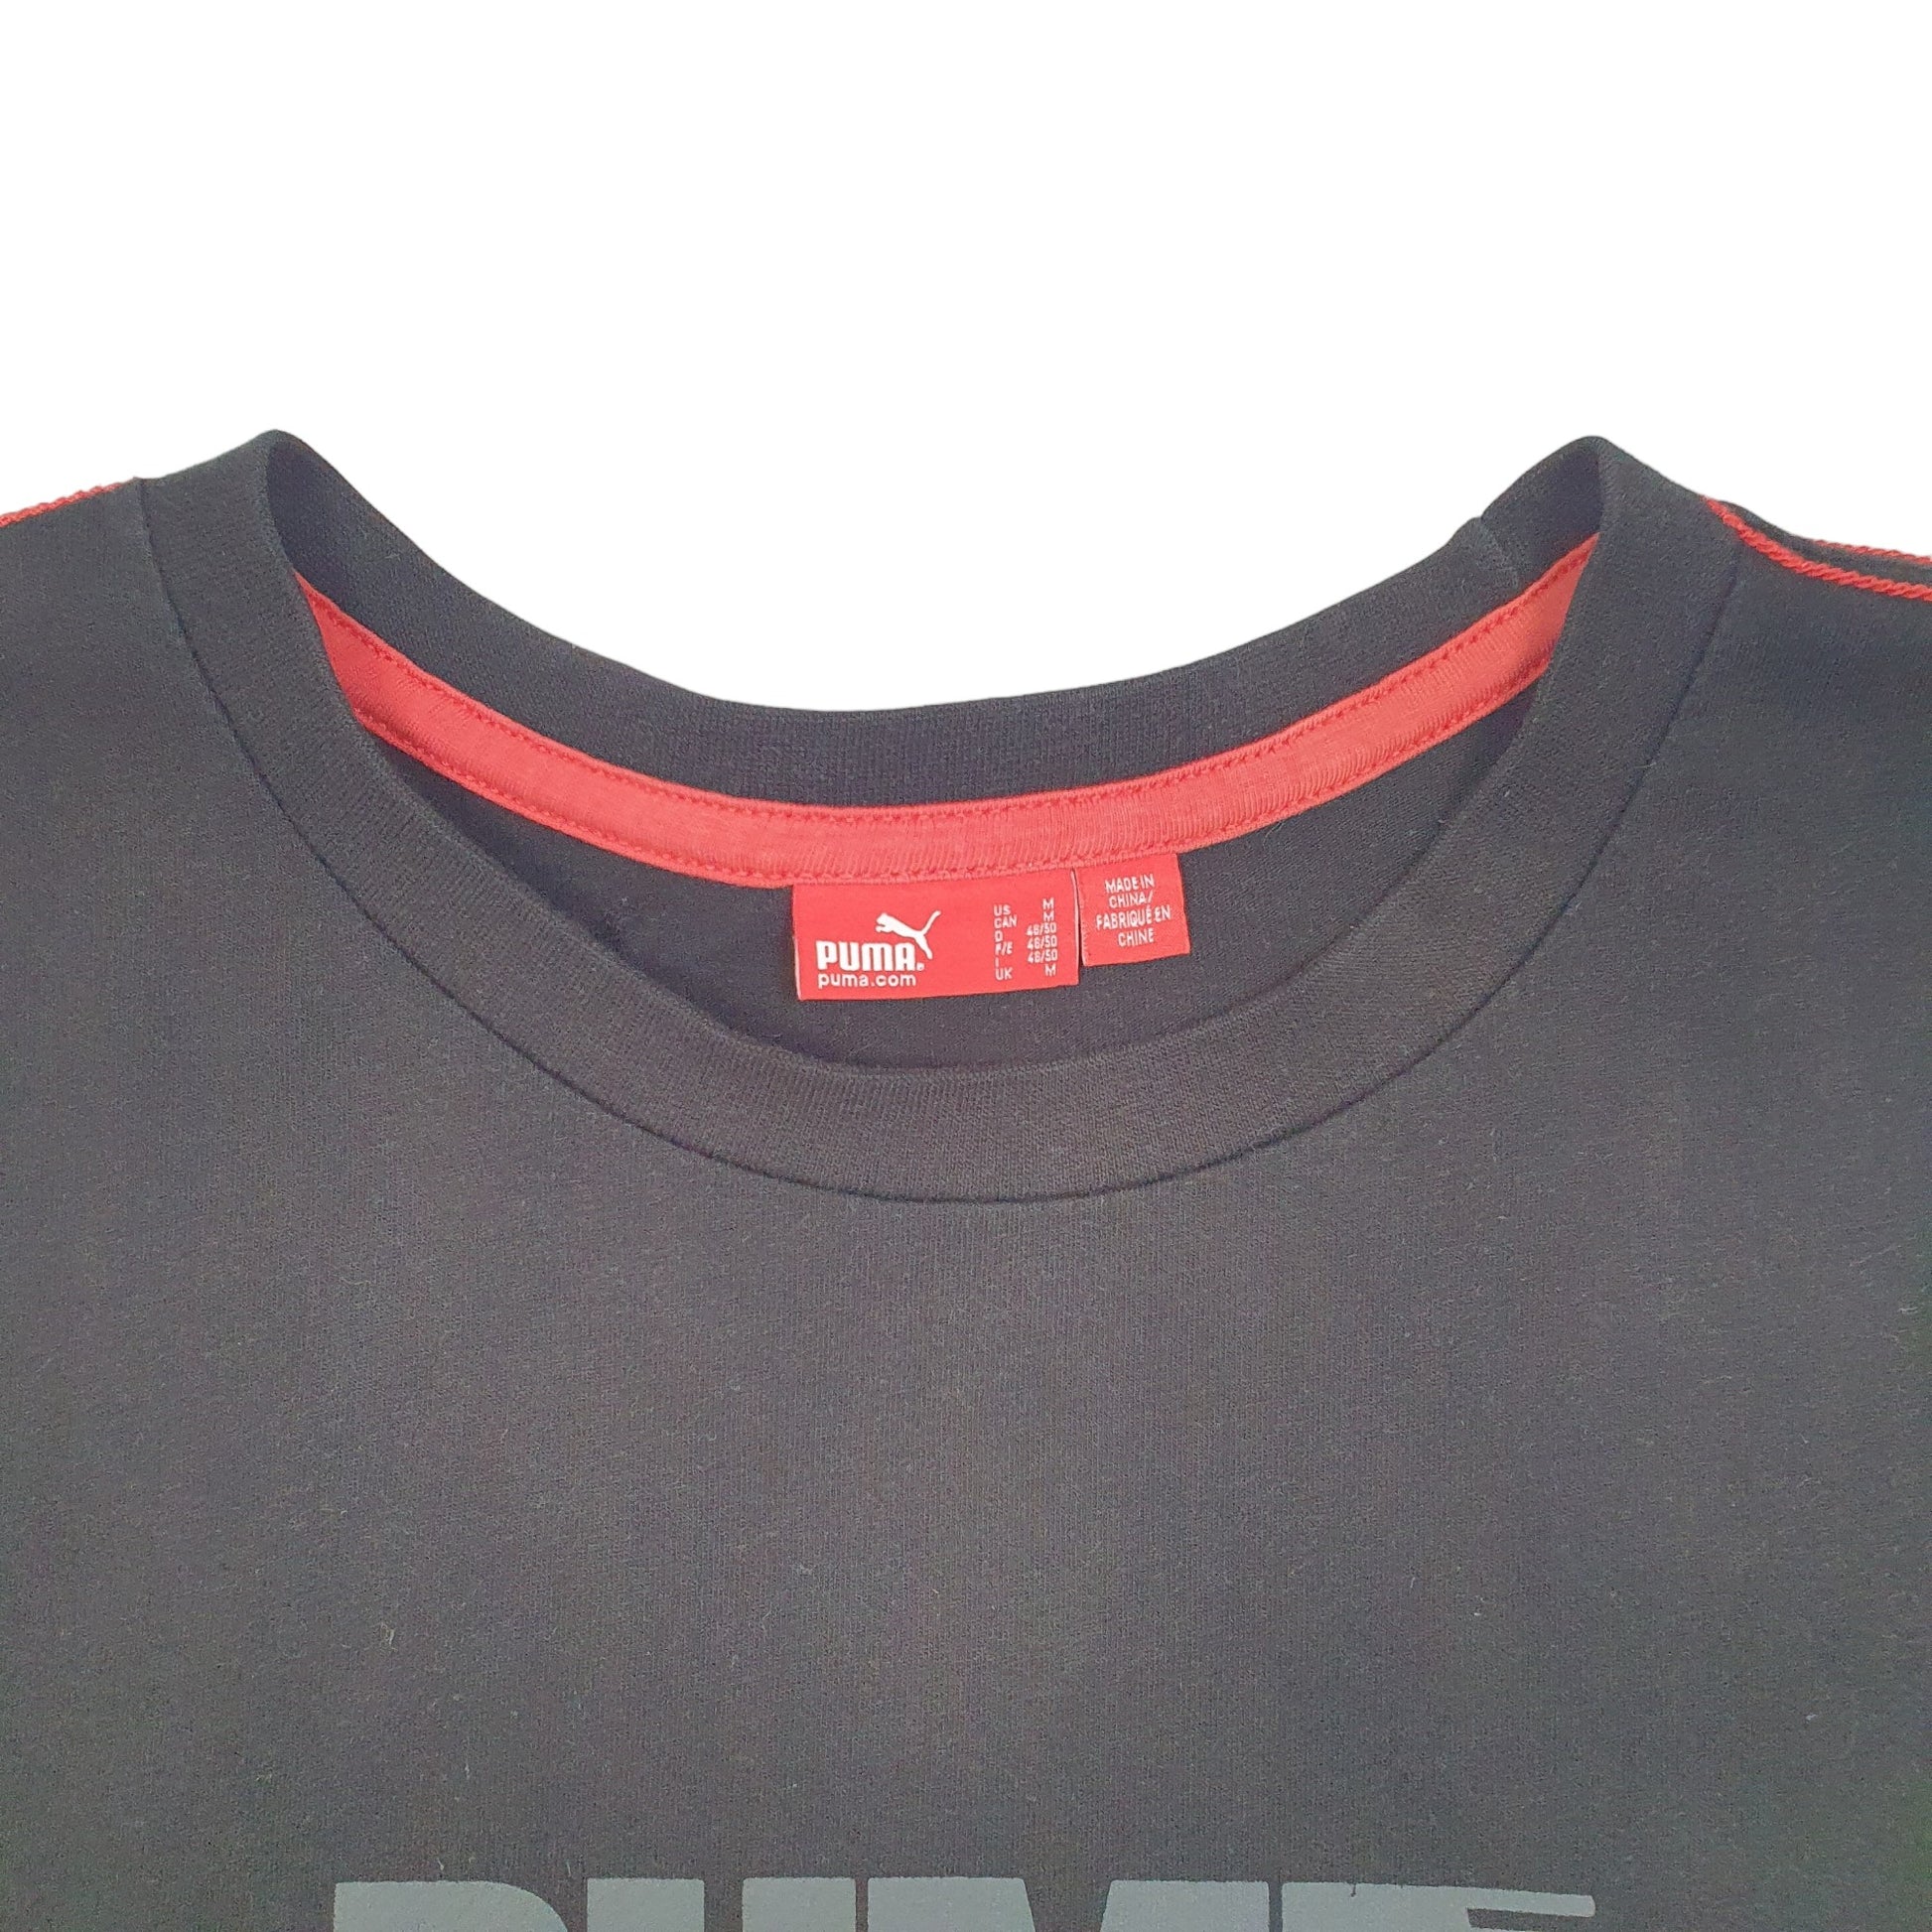 Mens Black Puma Spellout Original 48 Short Sleeve T Shirt